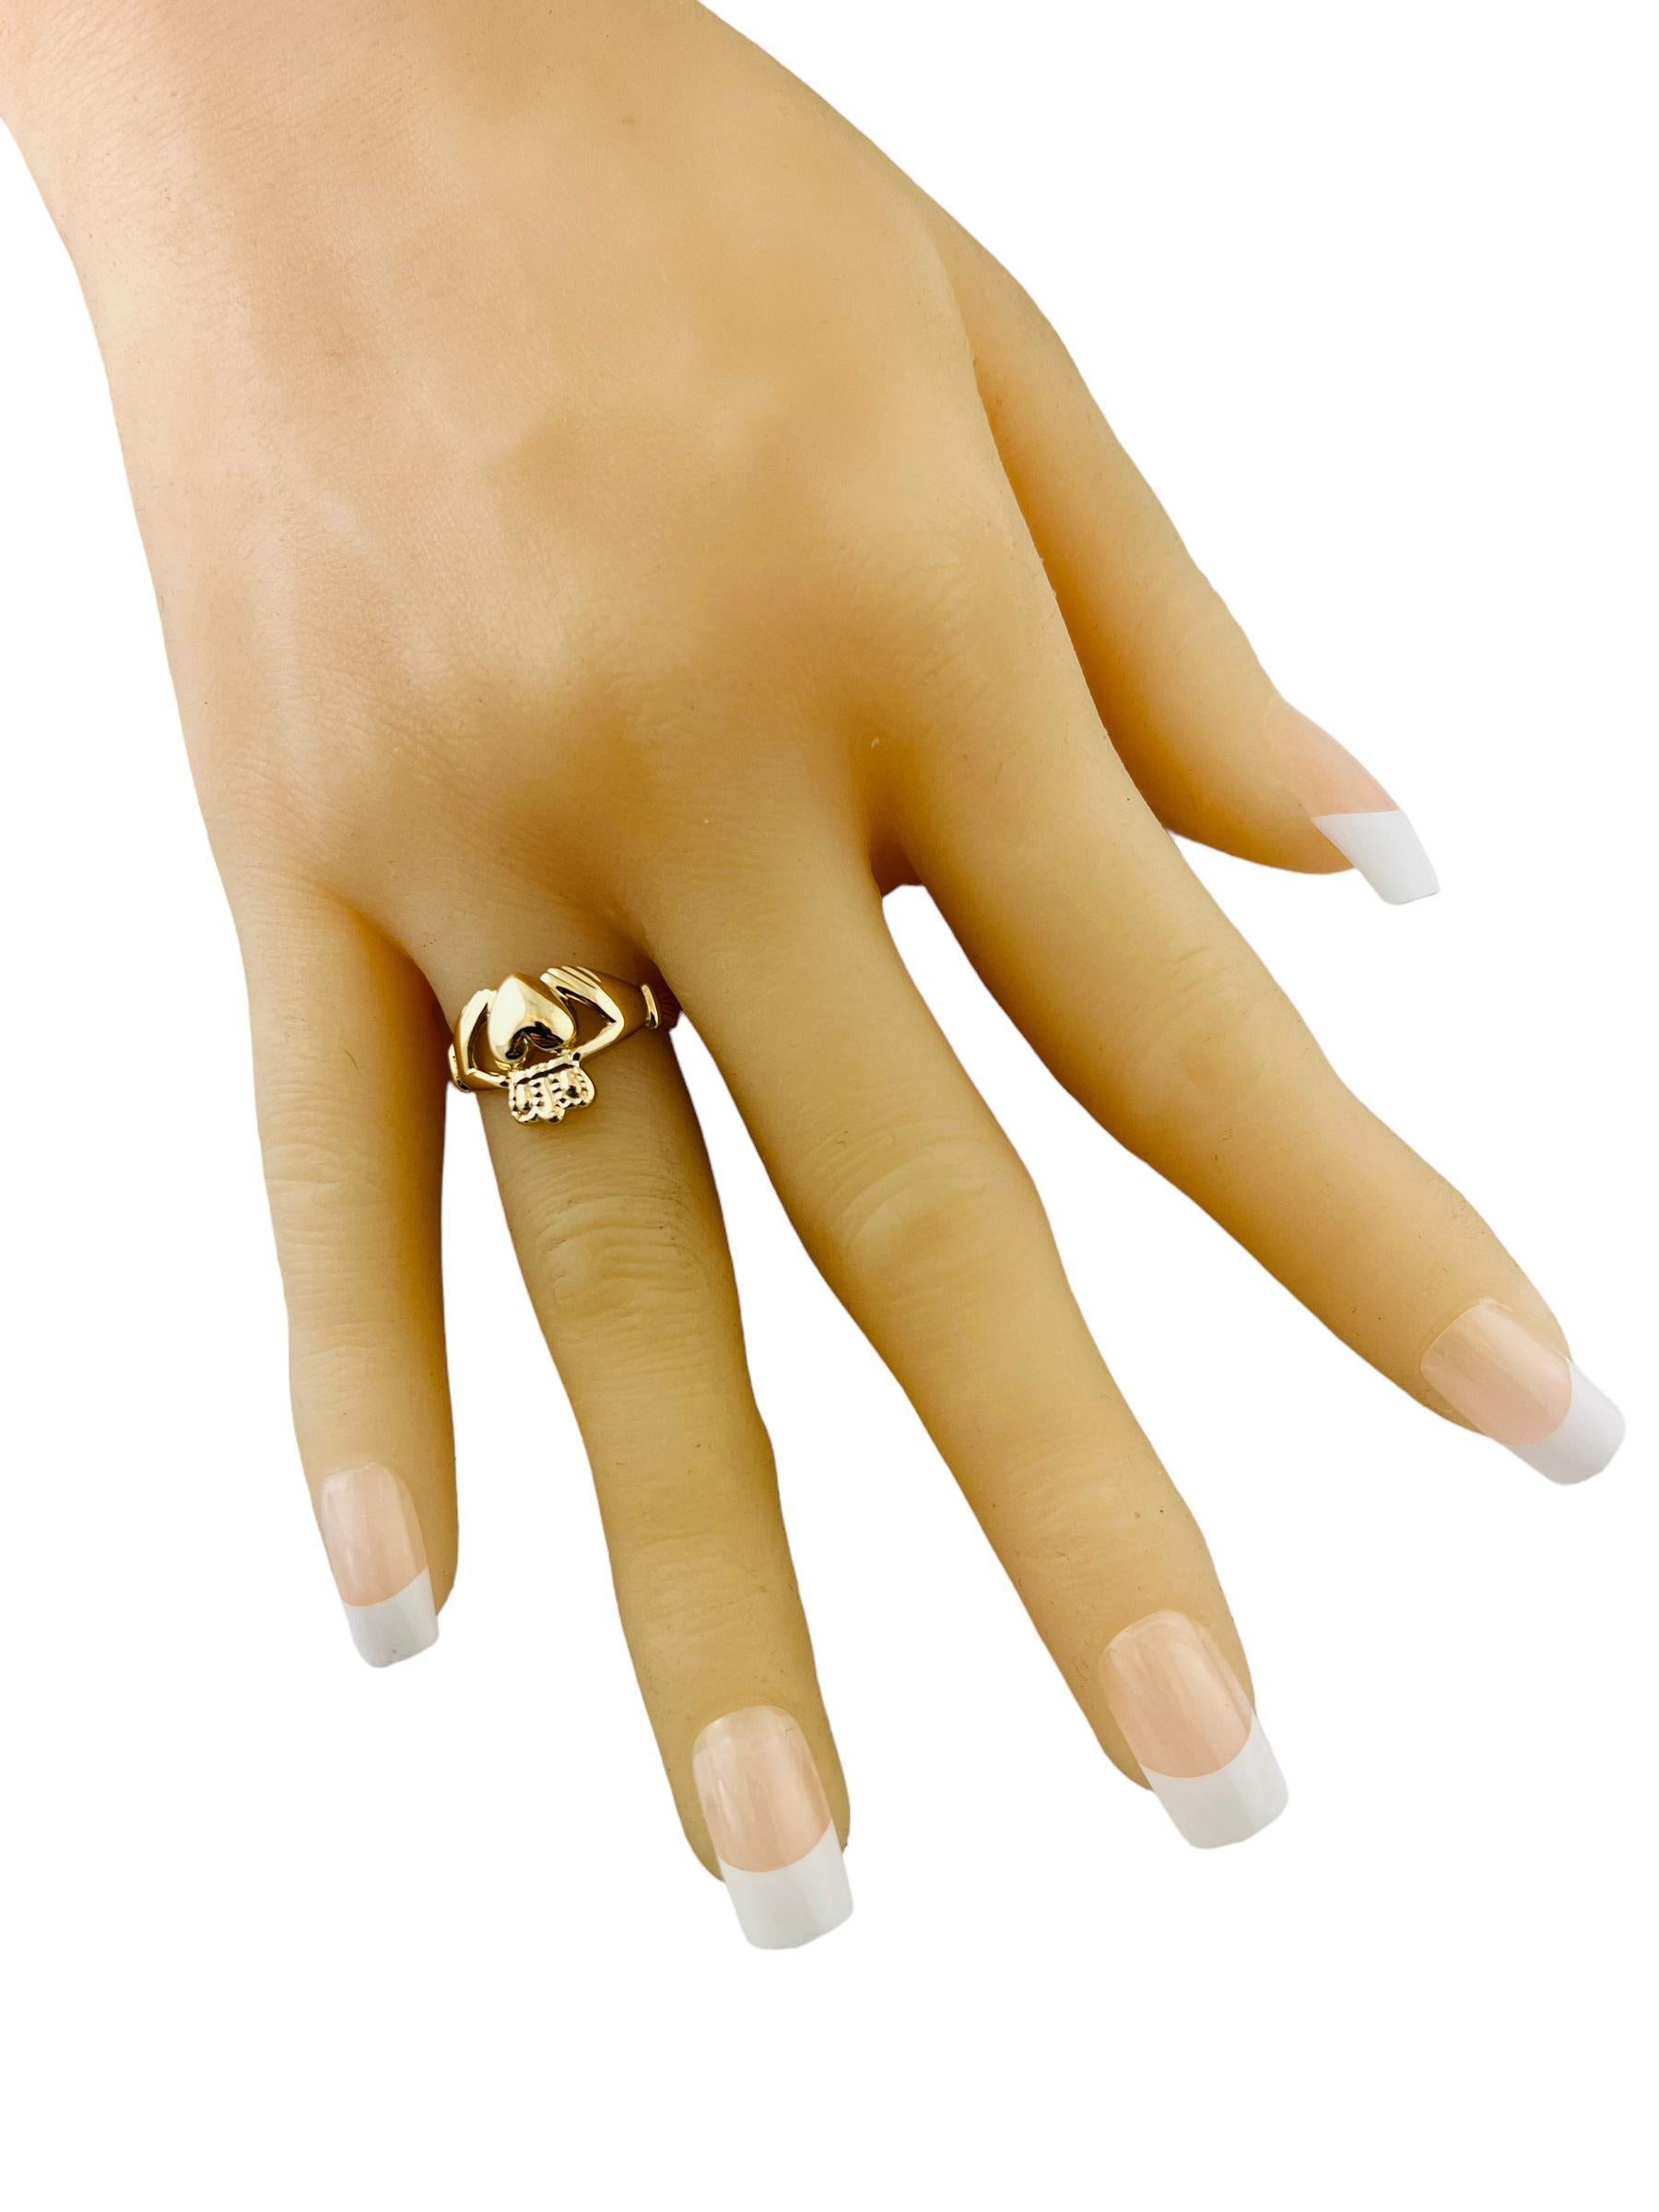 14K Yellow Gold Irish Claddagh Ring Size 6 #15618 1